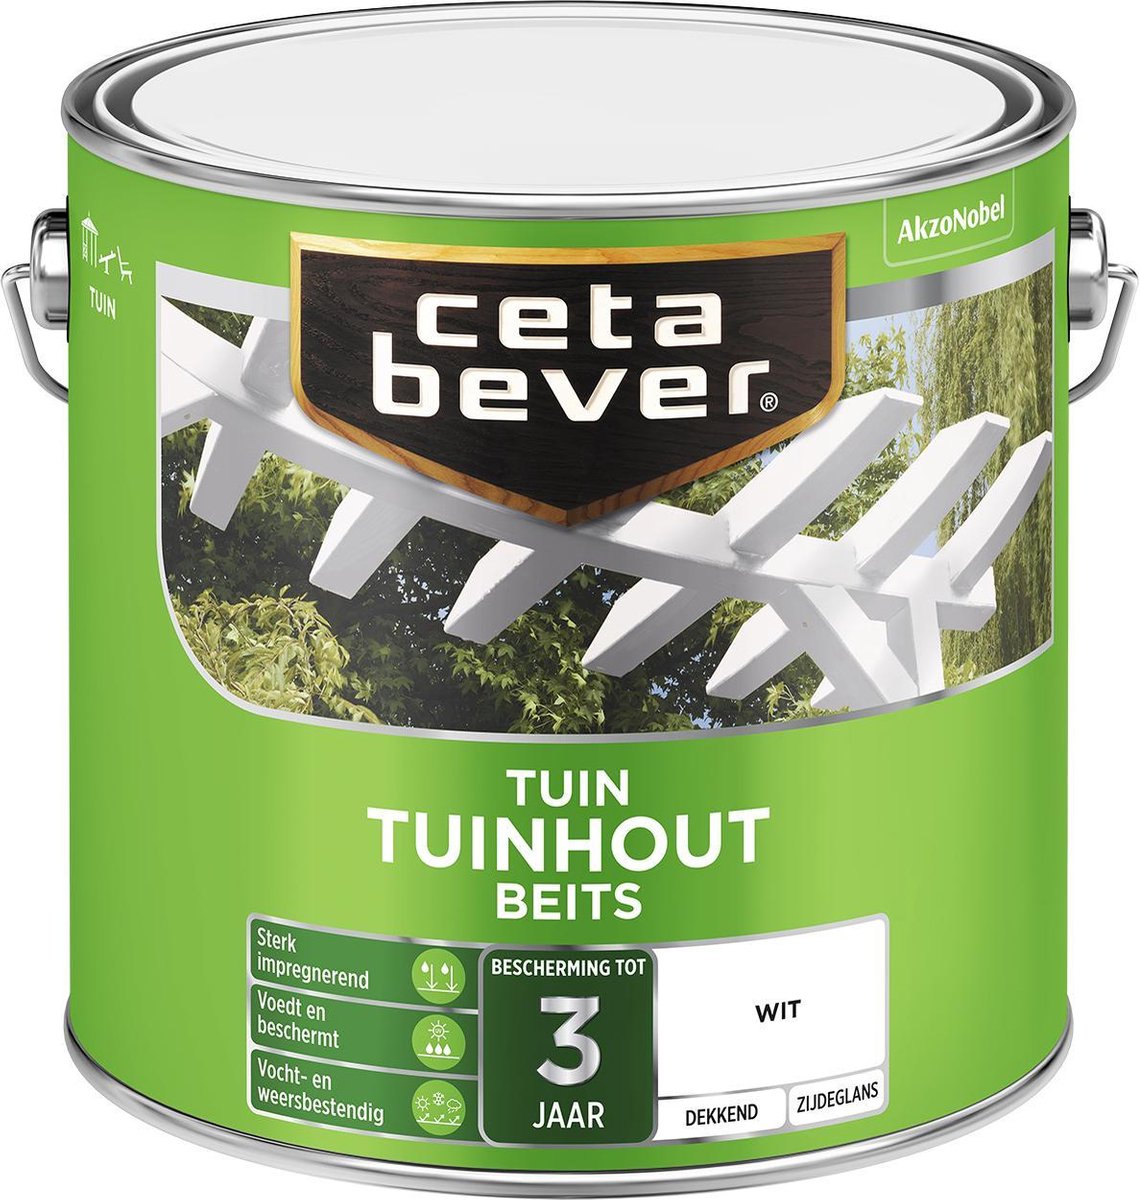 CetaBever Tuinhout - Zijdeglans - Wit 2,5 liter bol.com